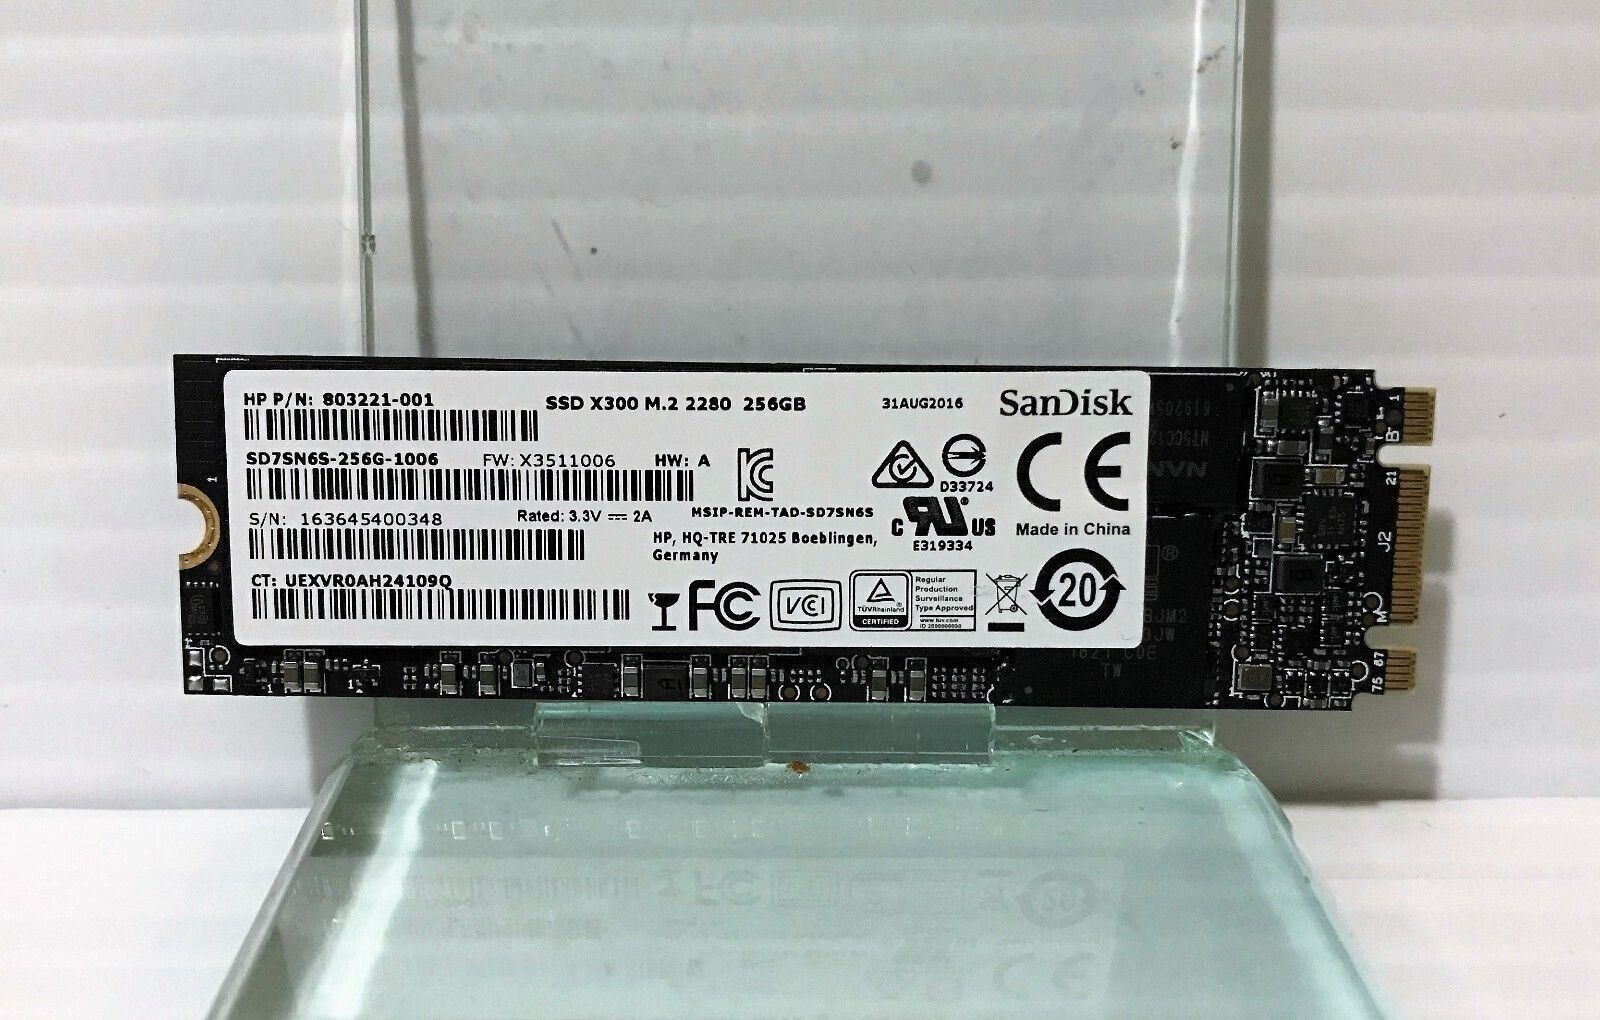 Genuine SanDisk SSD X300 M.2 2280 256GB SD7SN6S-256G-1006 60 DAYS WARRANTY